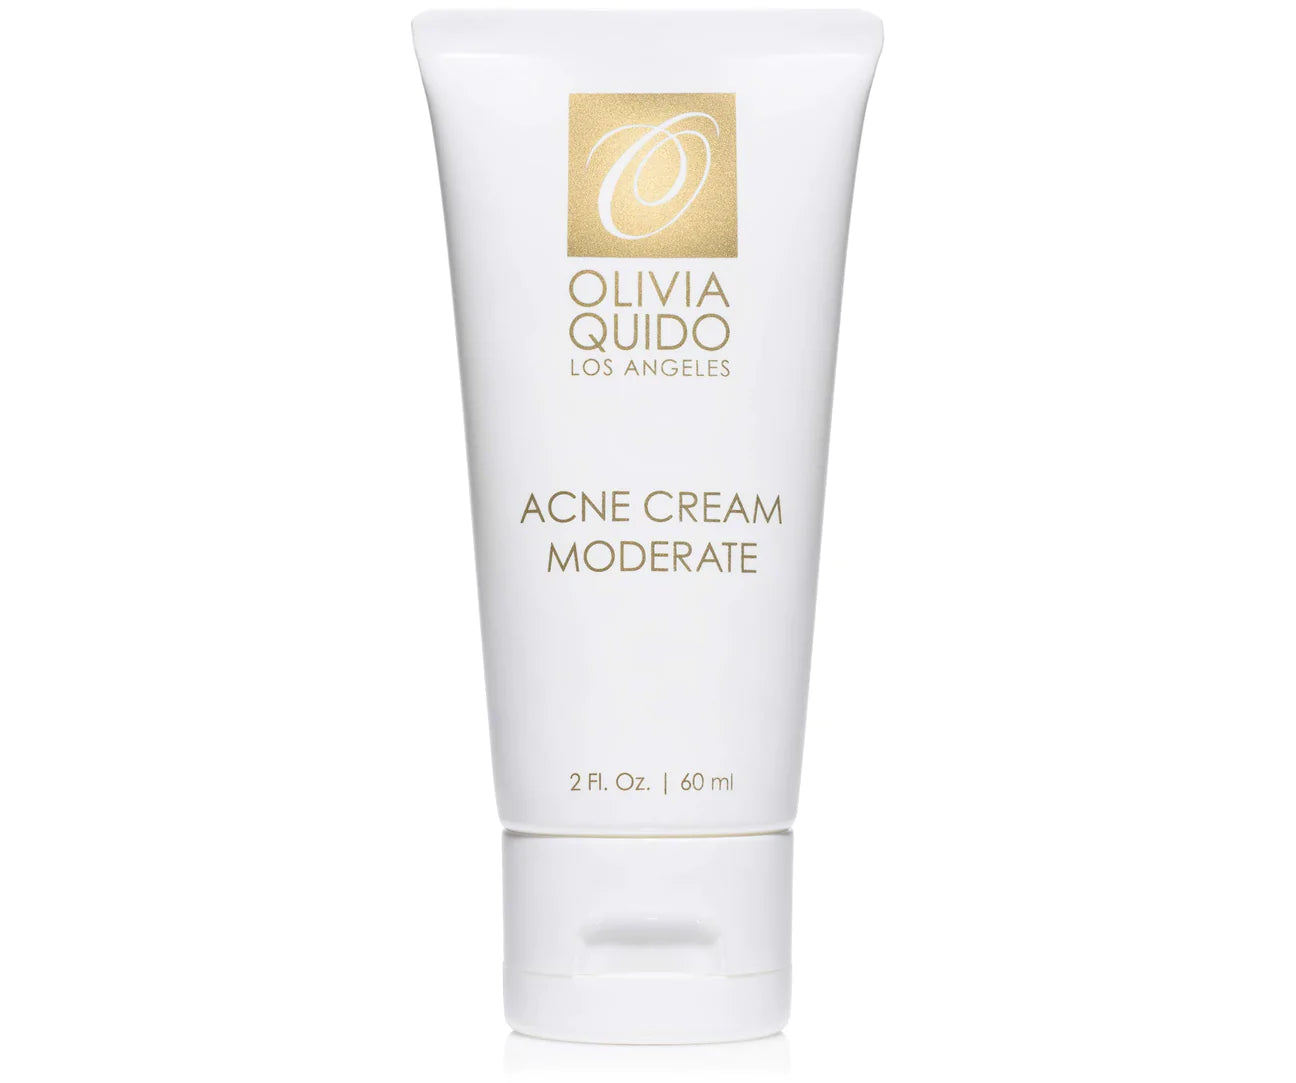 Acne Cream Moderate